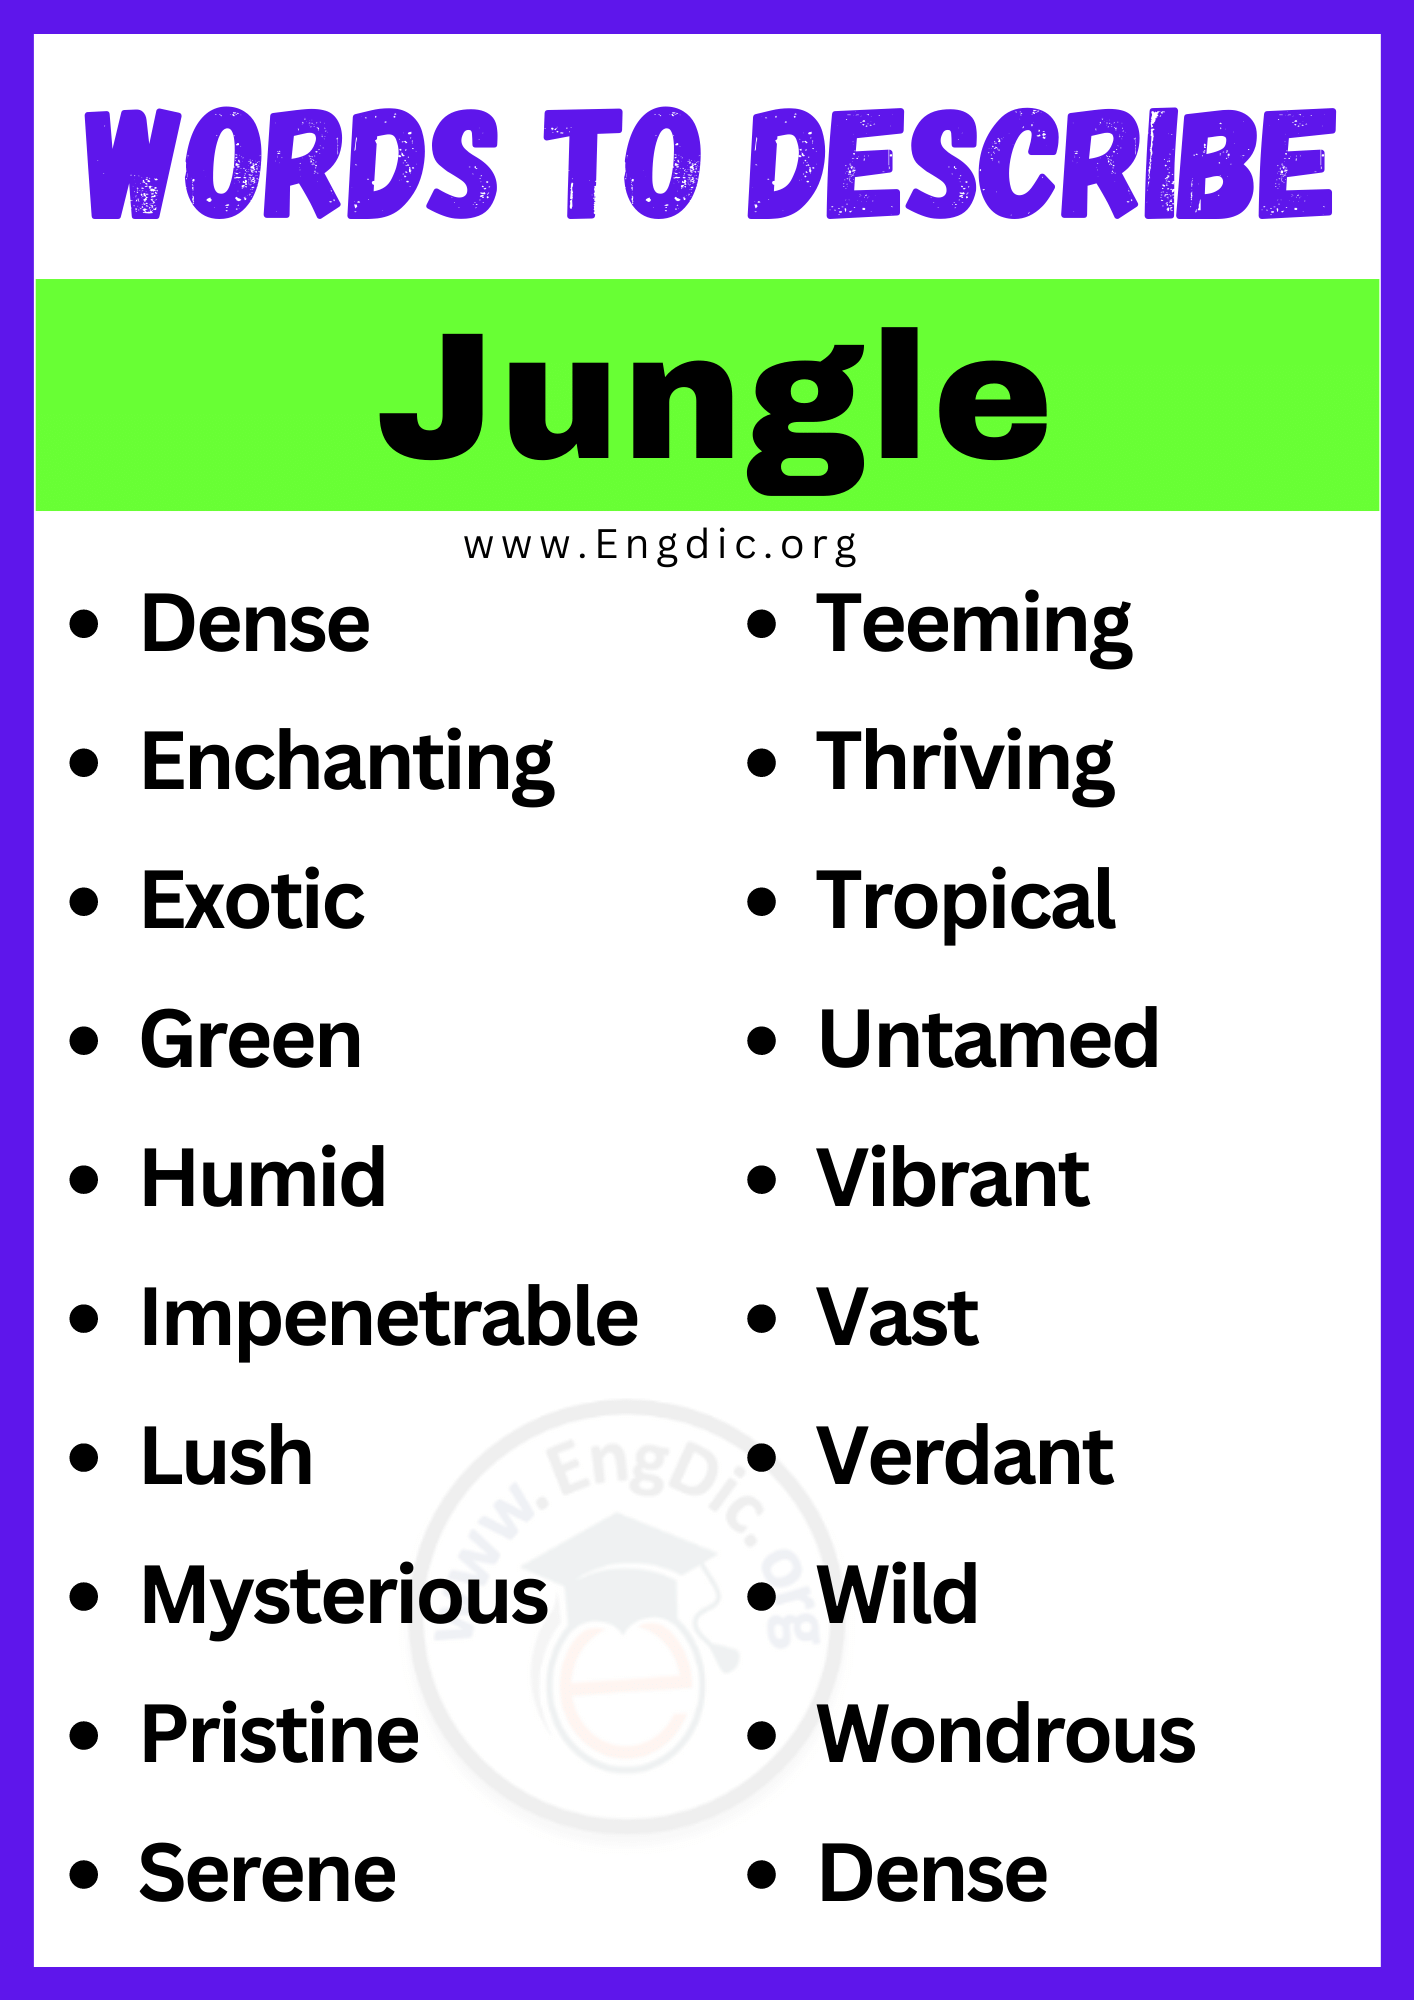 Words to Describe Jungle